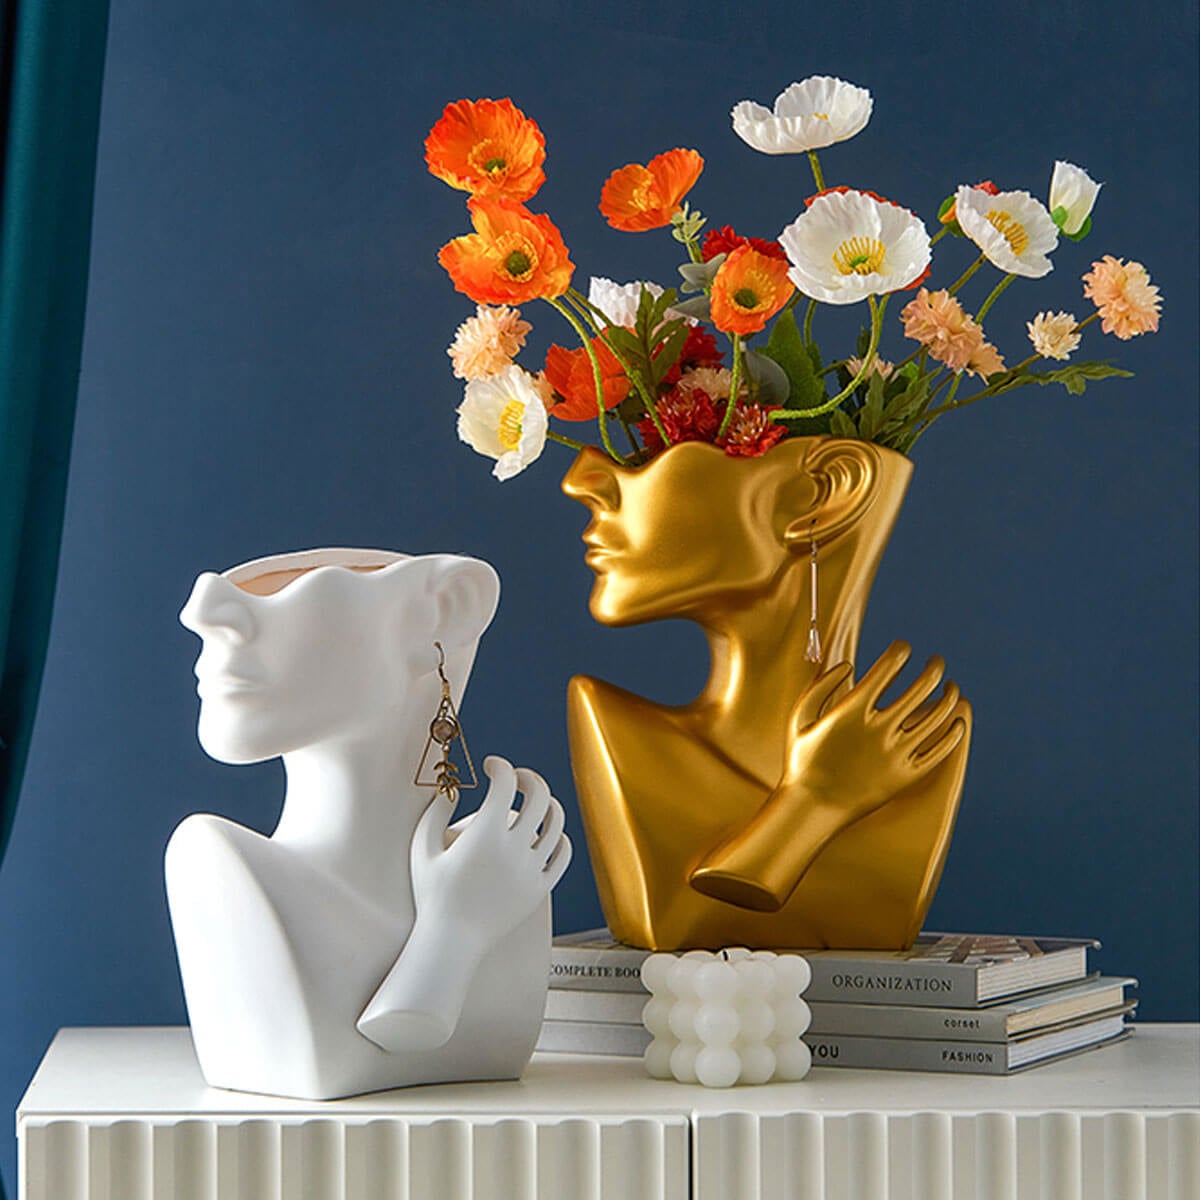 Creative Resin Sculpture Abstract Art Vase Modern Decoration Art